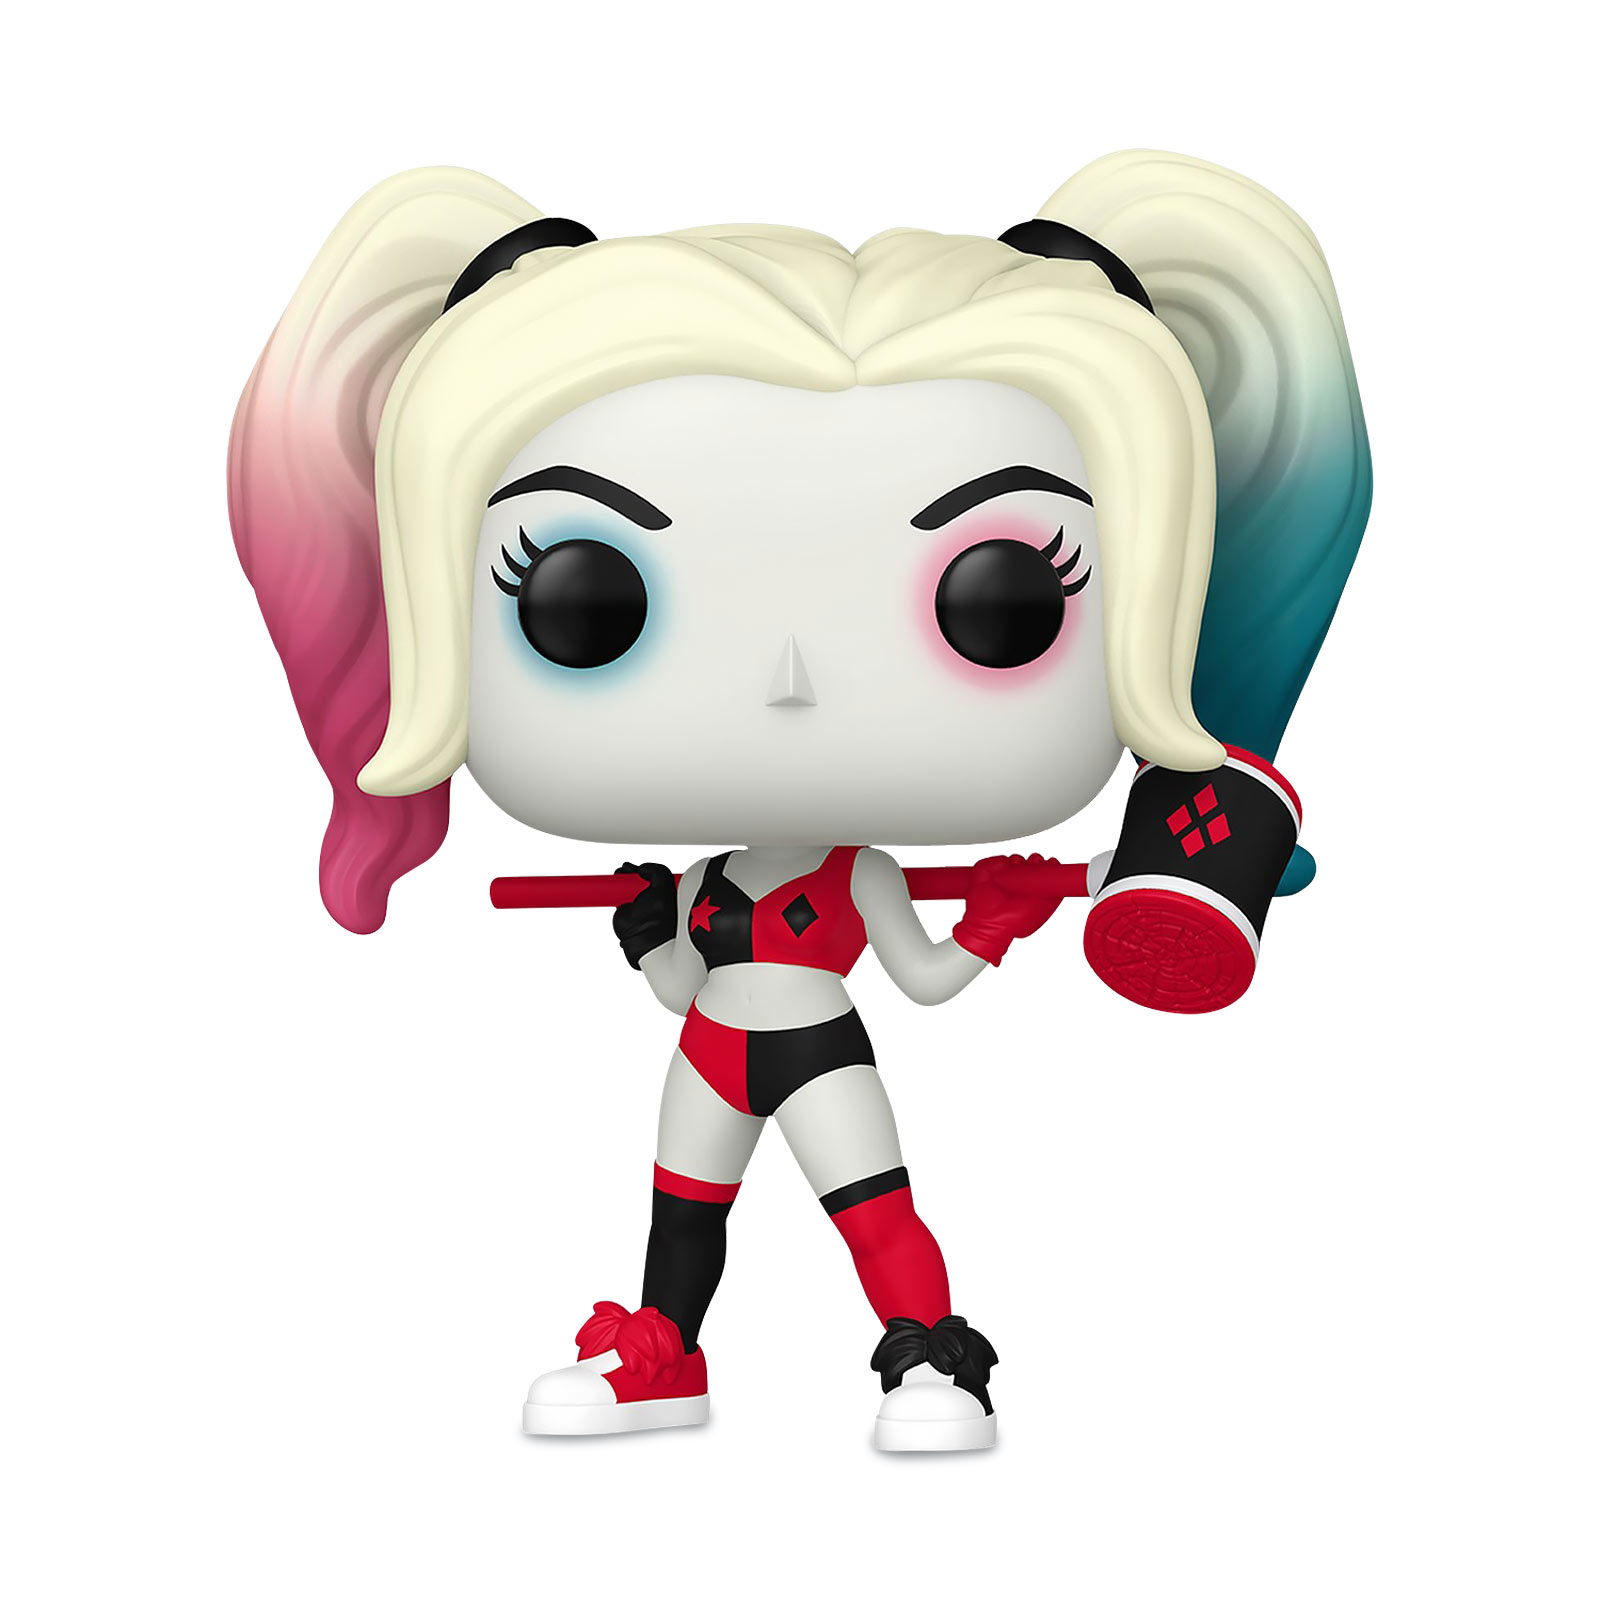 Harley Quinn avec figurine Funko Pop Hammer